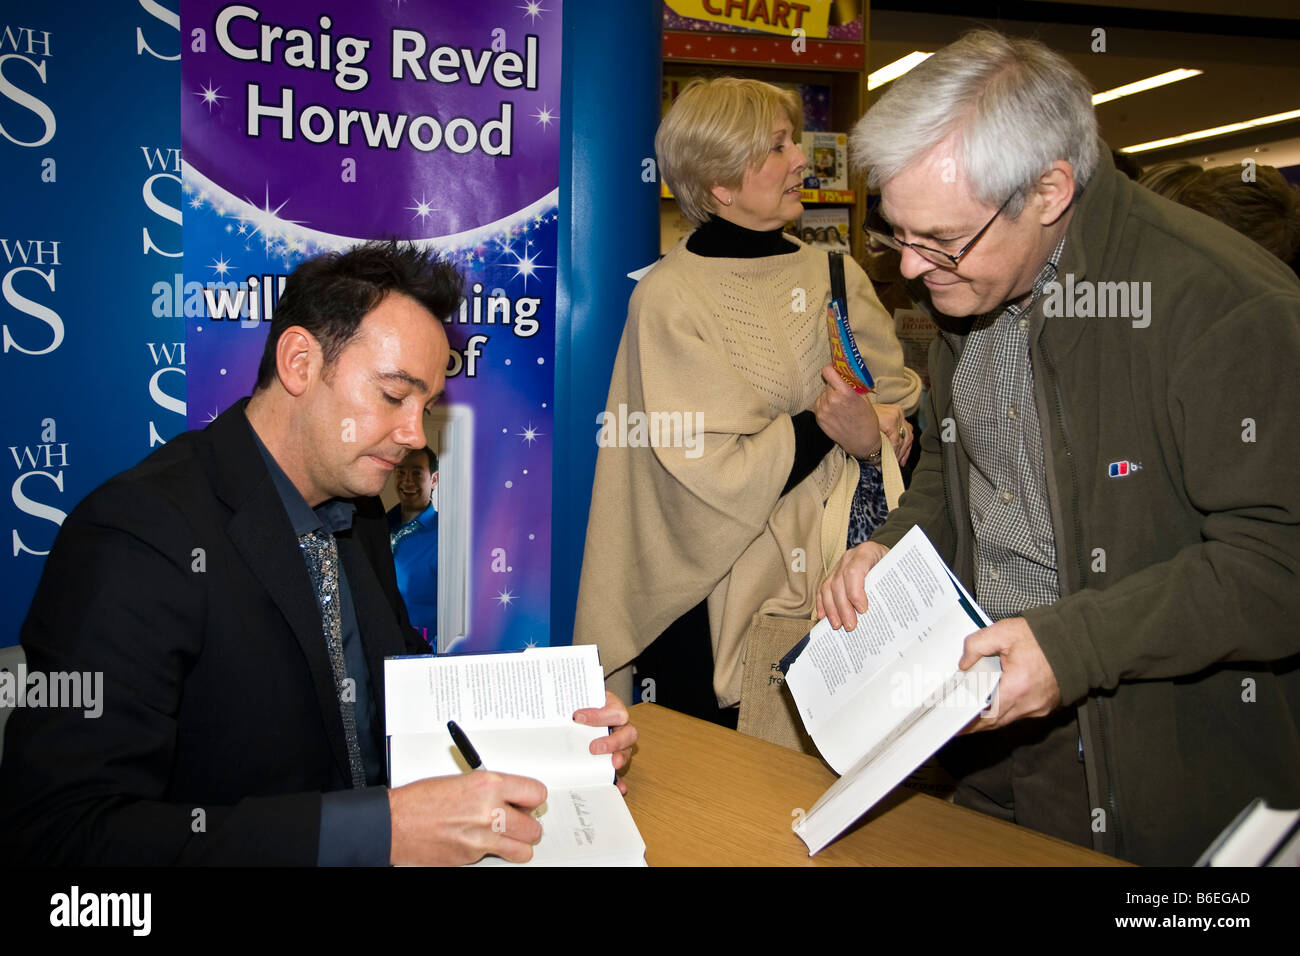 Craig Revel Horwood at book signing Stock Photo